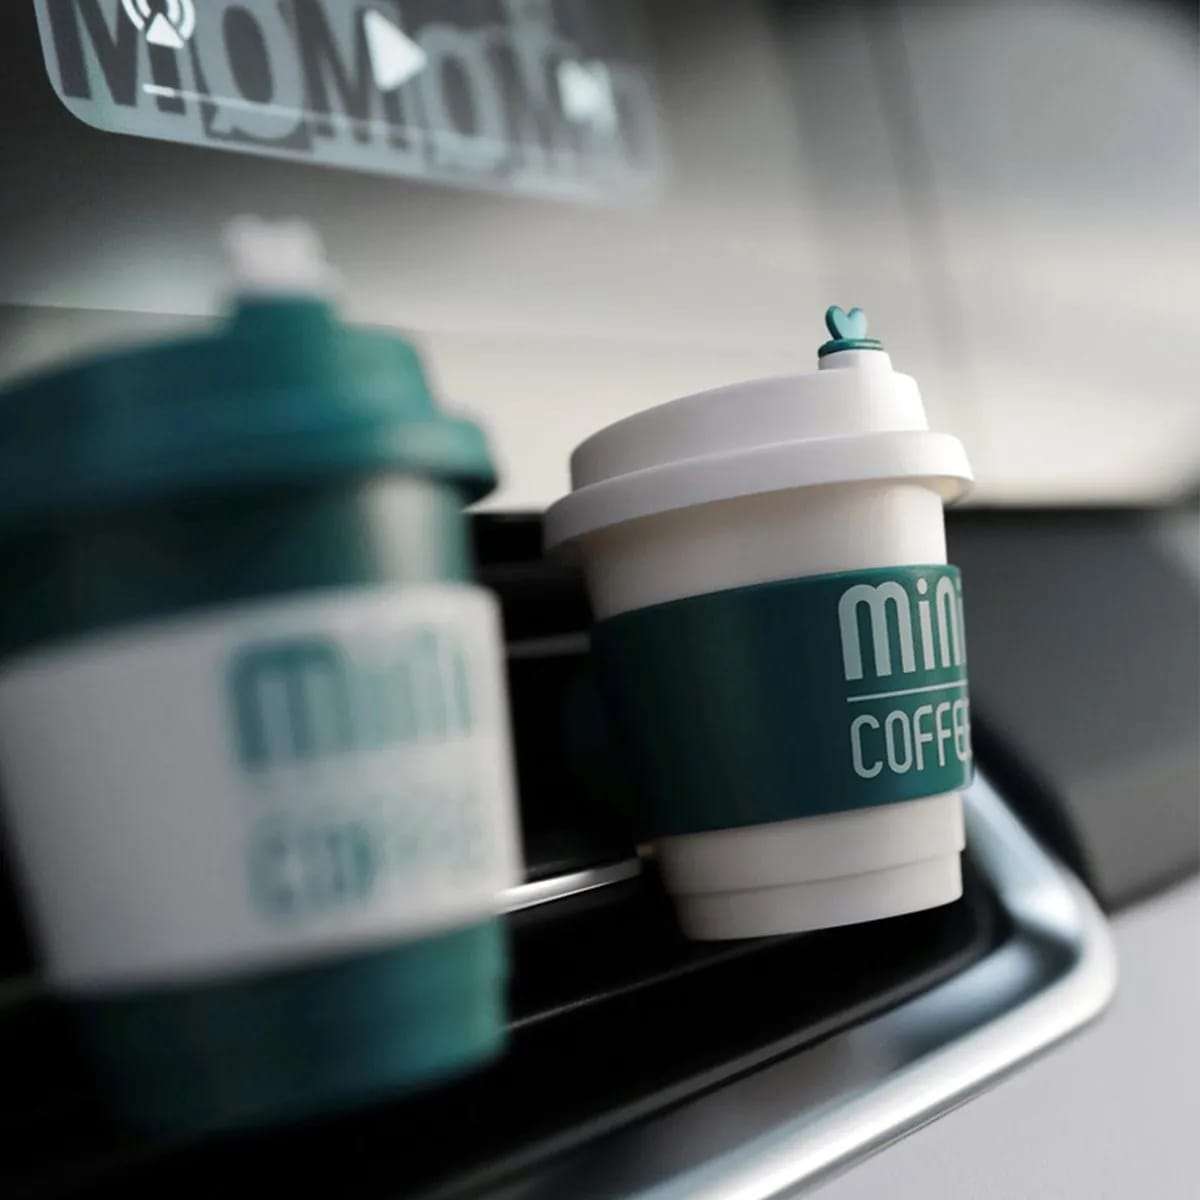 White / Green Color Car Mini Coffee Cup Air Fresheners